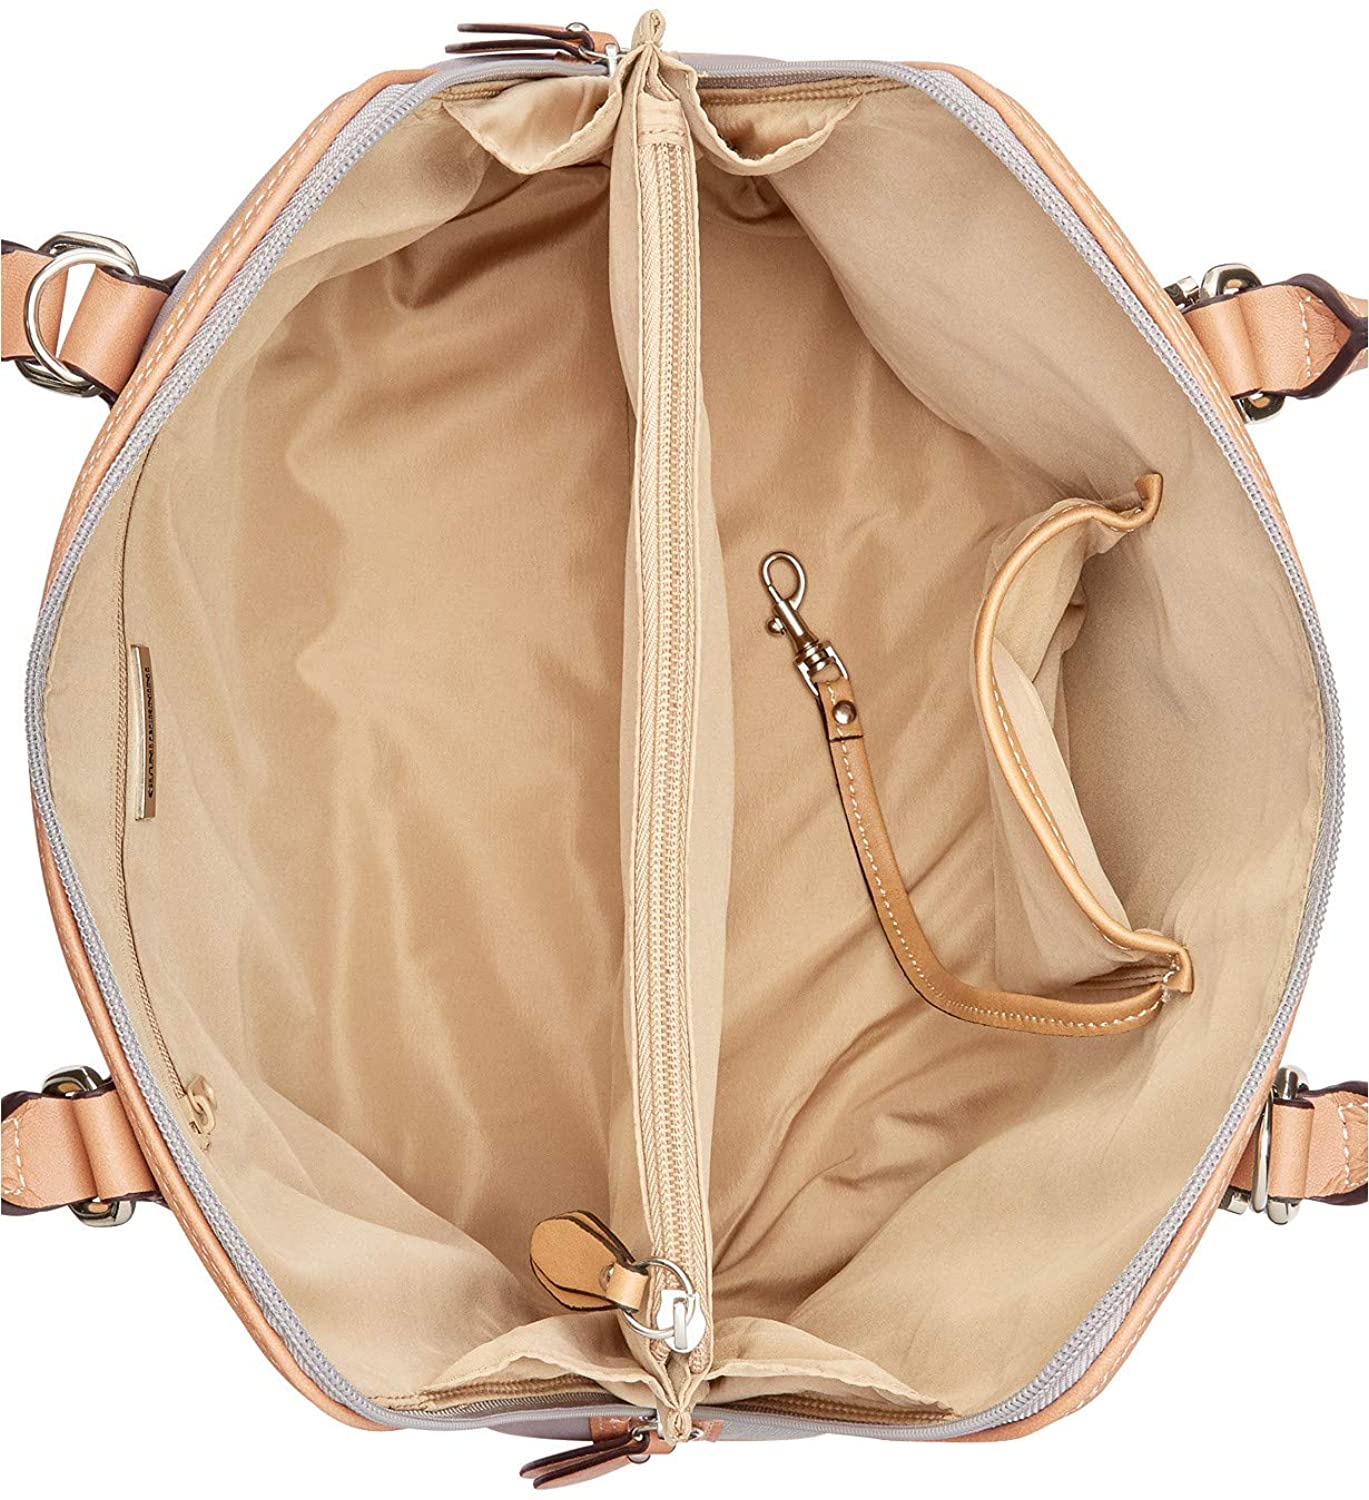 Giani Bernini Womens Saffiano Dome Satchel Handbag